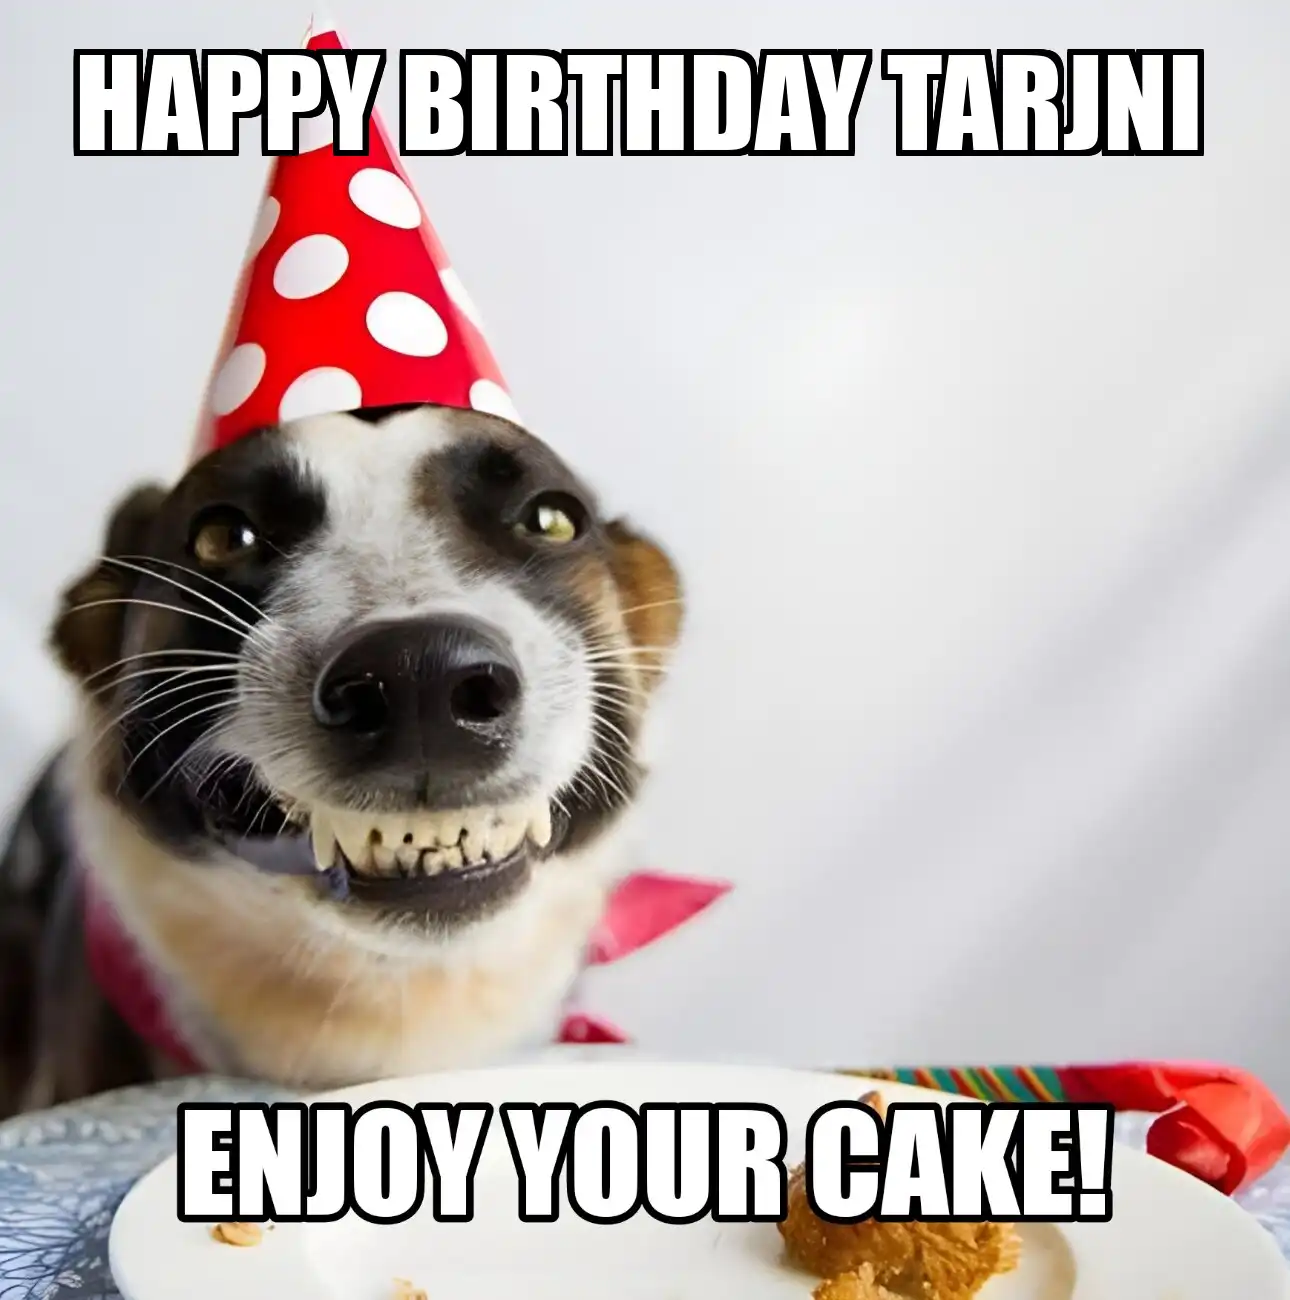 Happy Birthday Tarjni Enjoy Your Cake Dog Meme